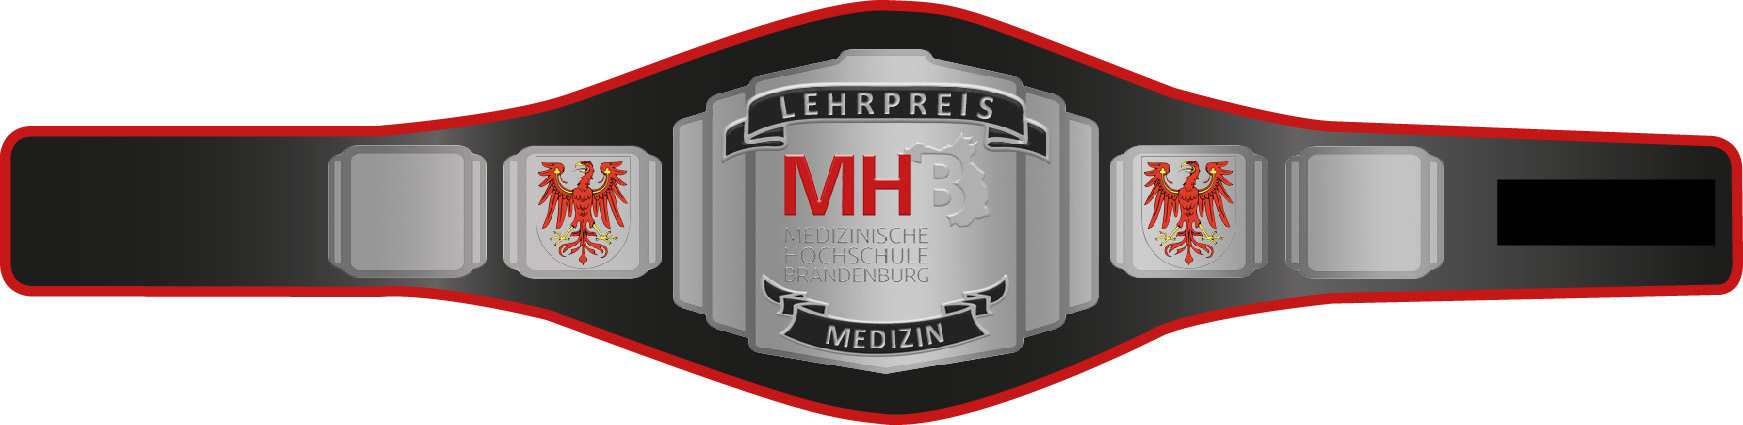 MHB Lehrpreis Medizin Champion Grtel